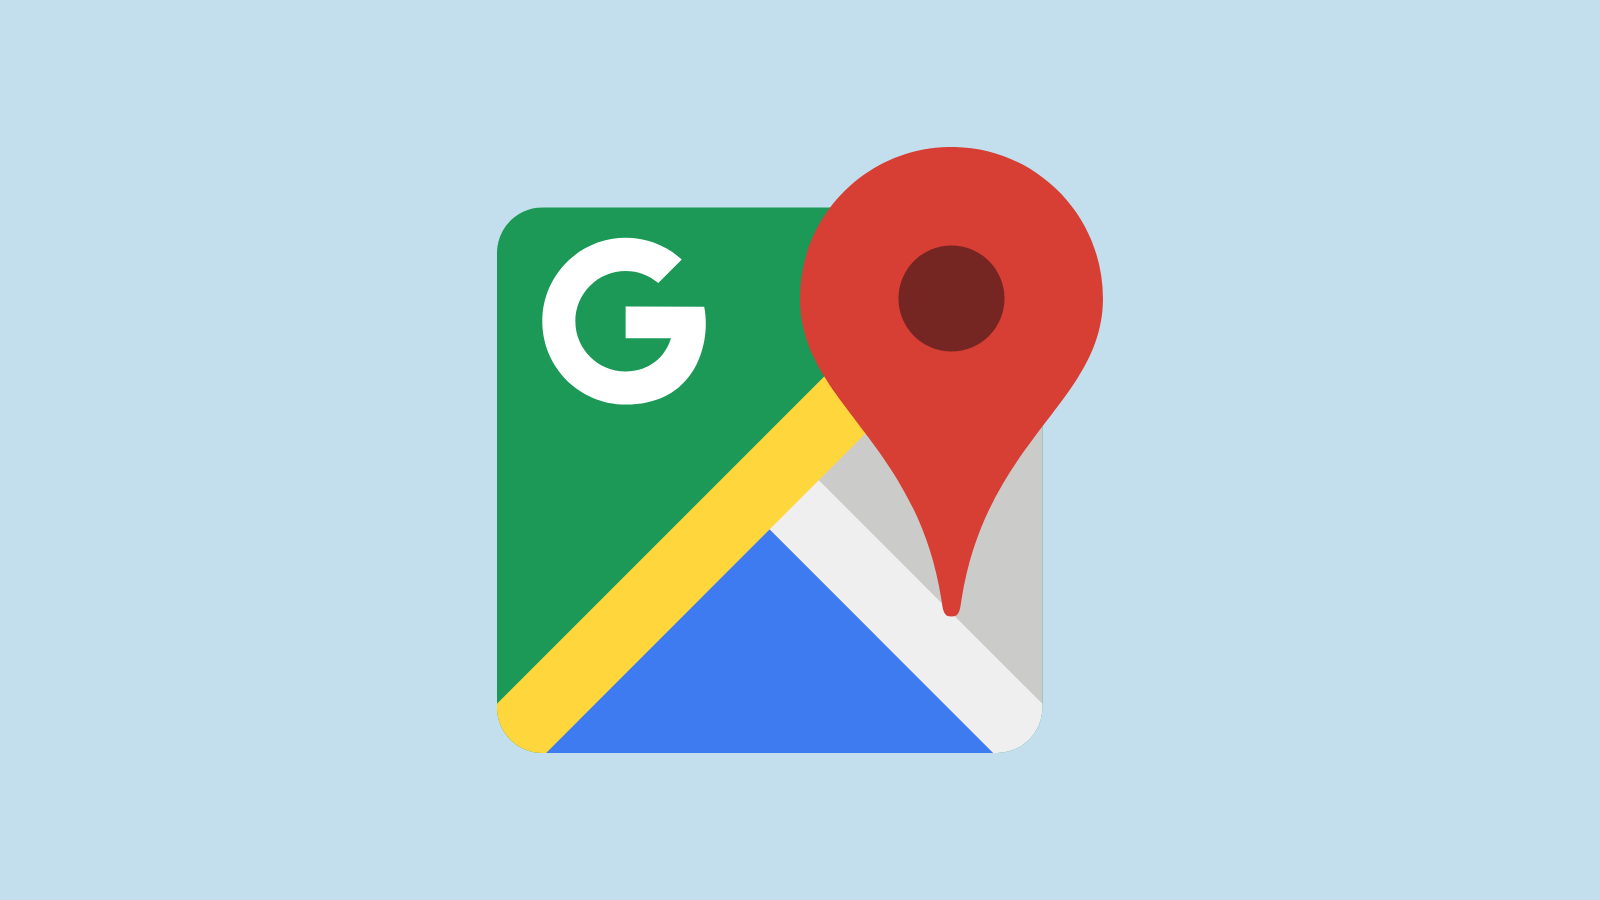 The Google Maps icon